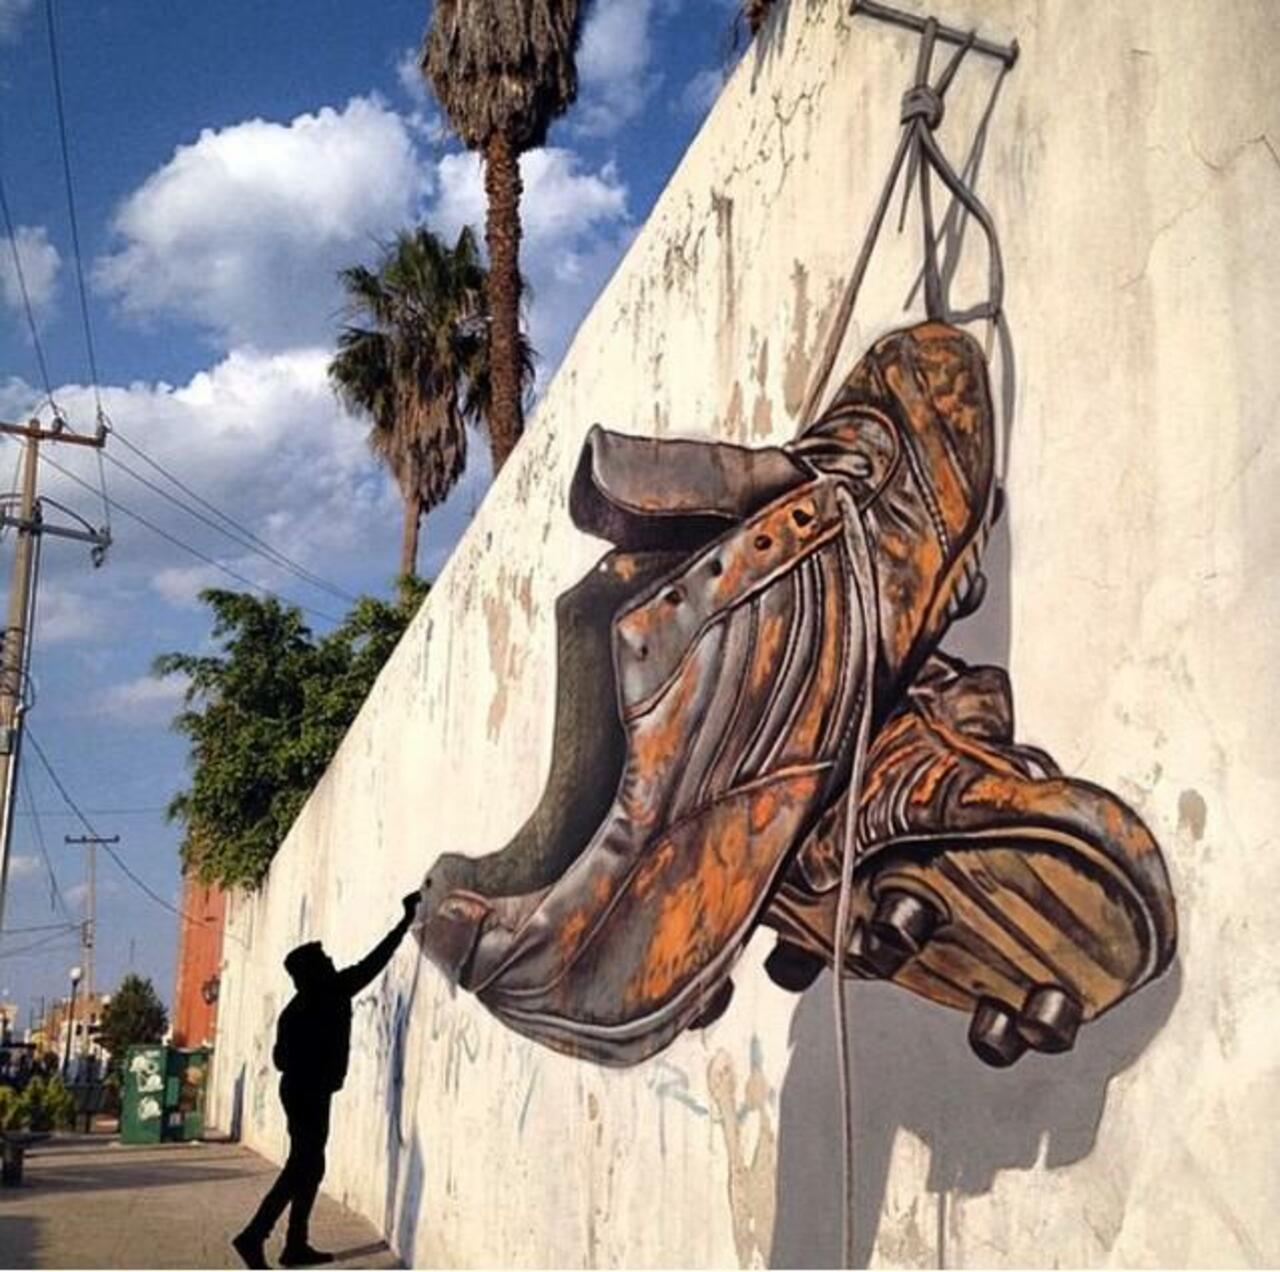 Awesome anamorphic 3D Street Art by Juandres Vera 

#art #graffiti #mural #streetart http://t.co/qs0xzZPBq4